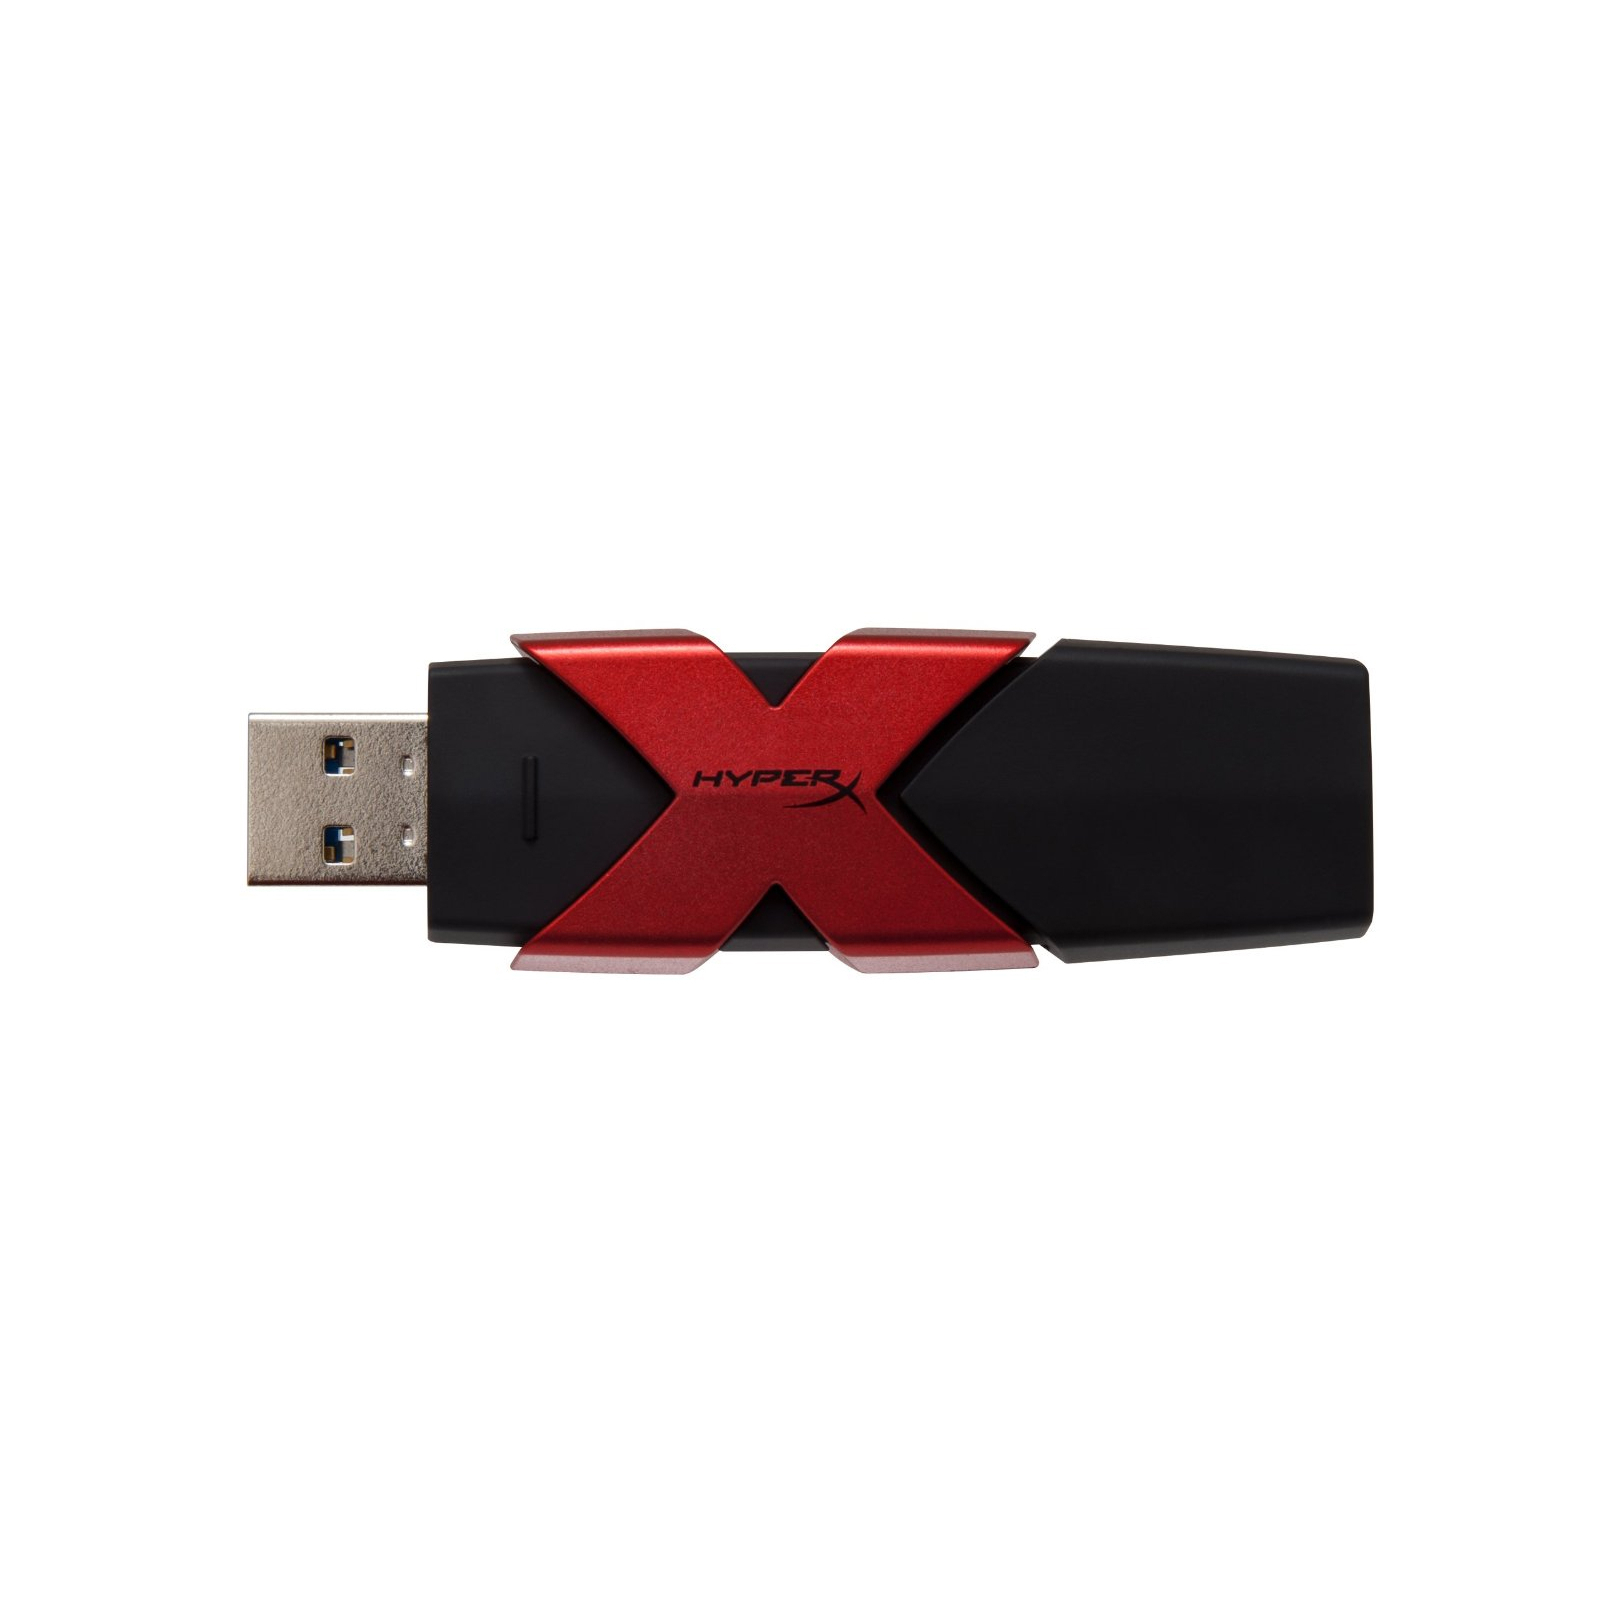 USB флеш накопитель Kingston 64GB HyperX Savage USB 3.1 (HXS3/64GB) изображение 4